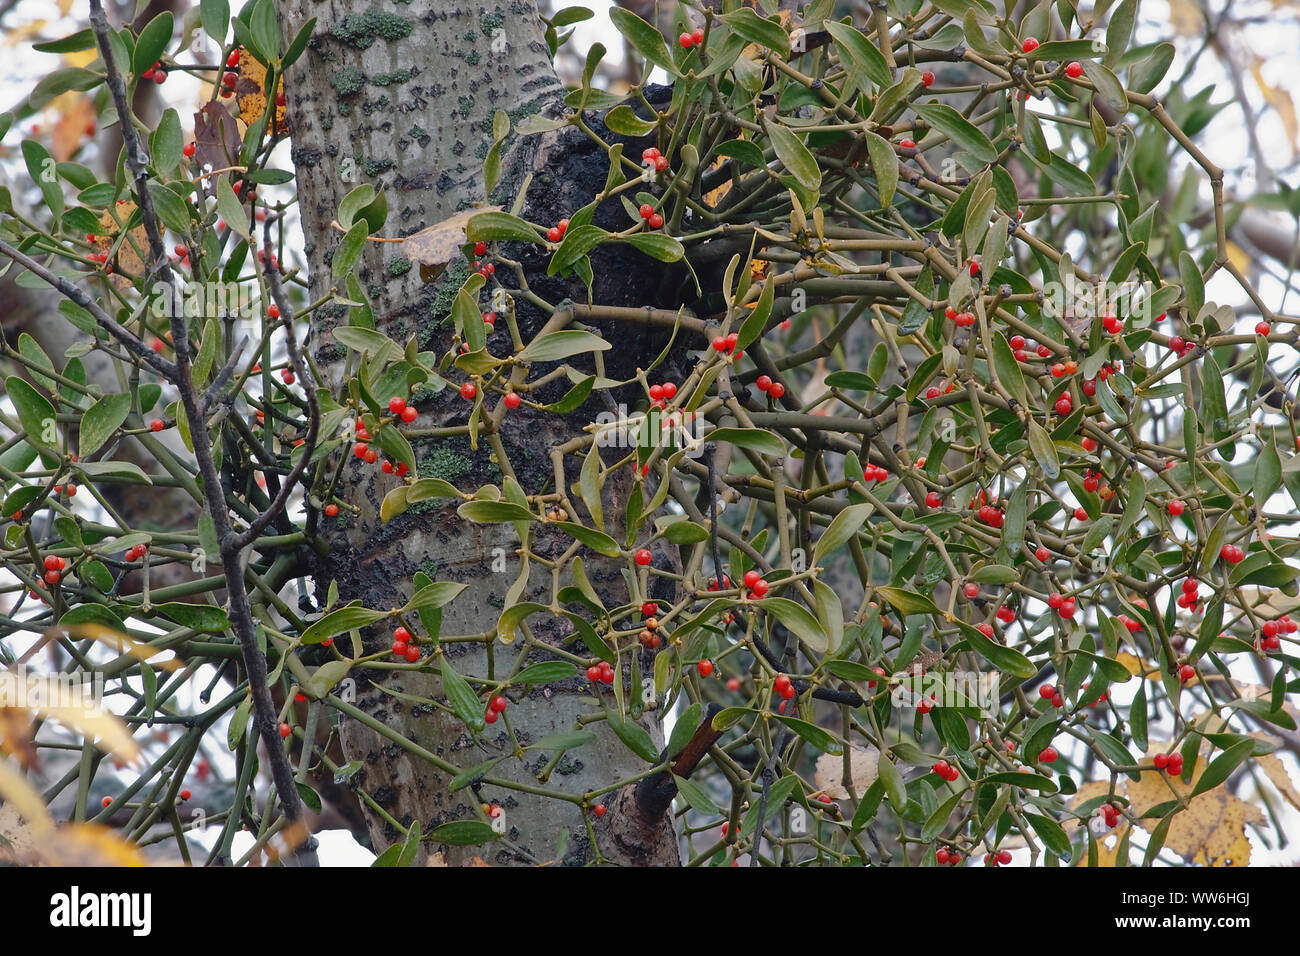 Korean mistletoe, Viscum album coloratum, Red berries growing outdoor on host tree. Stock Photo